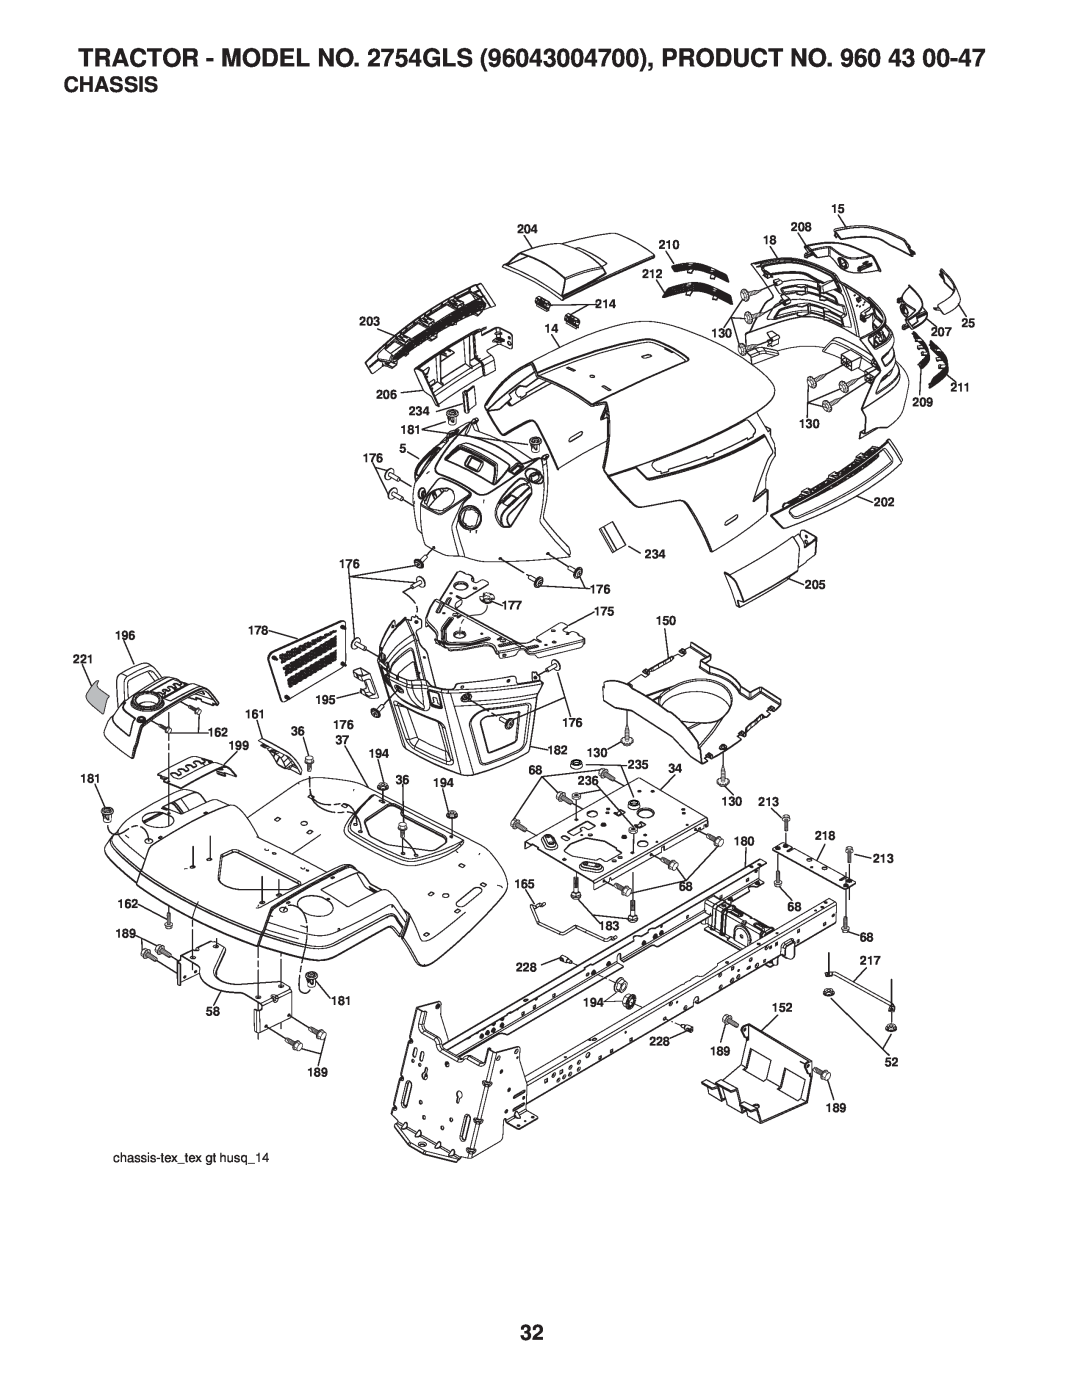 Husqvarna 2754 GLS manual Chassis, TRACTOR - MODEL NO. 2754GLS 96043004700, PRODUCT NO. 960 43, chassis-textex gt husq14 